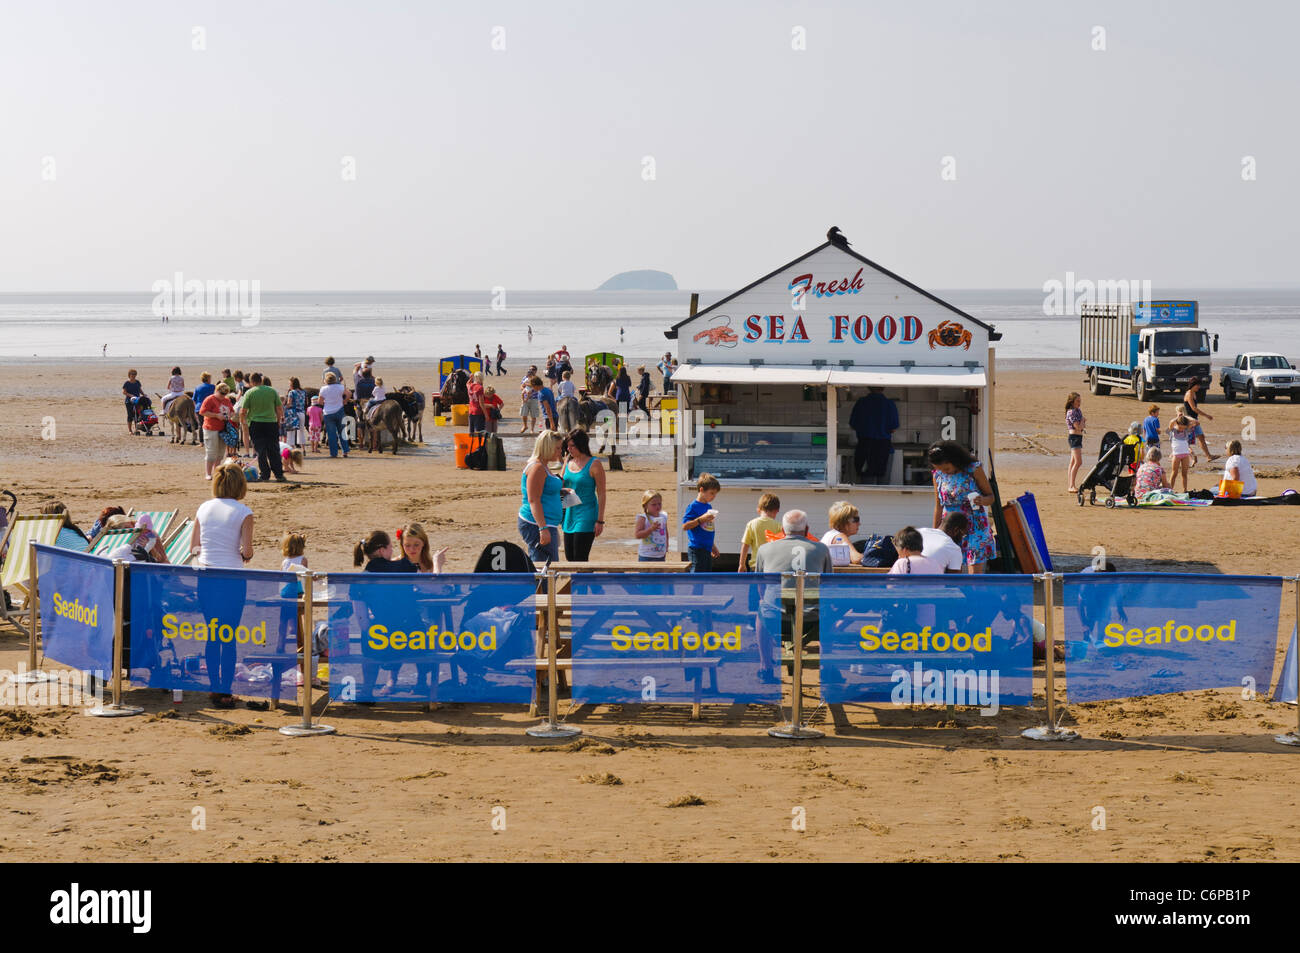 Sea Food hut on the beach of an English seaside town Stock Photo